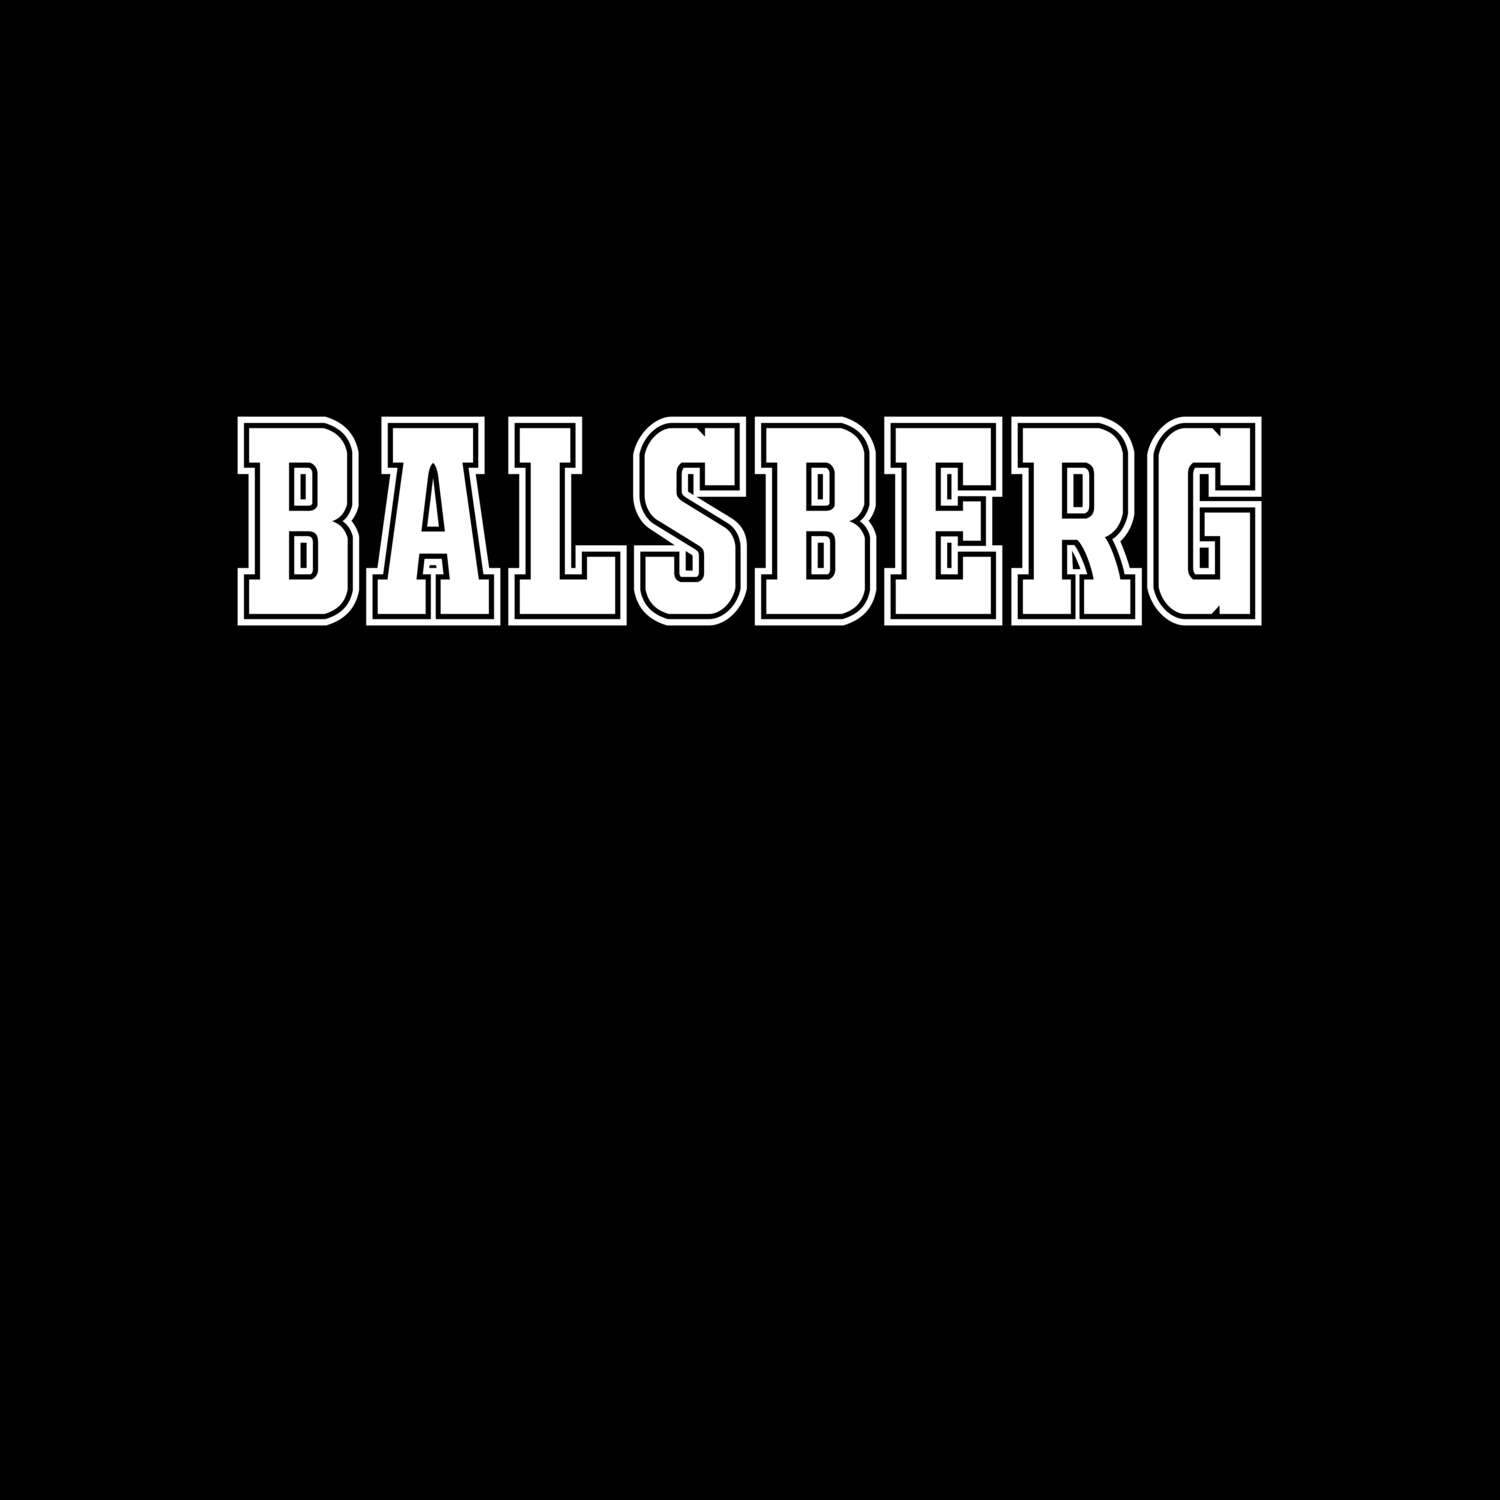 Balsberg T-Shirt »Classic«